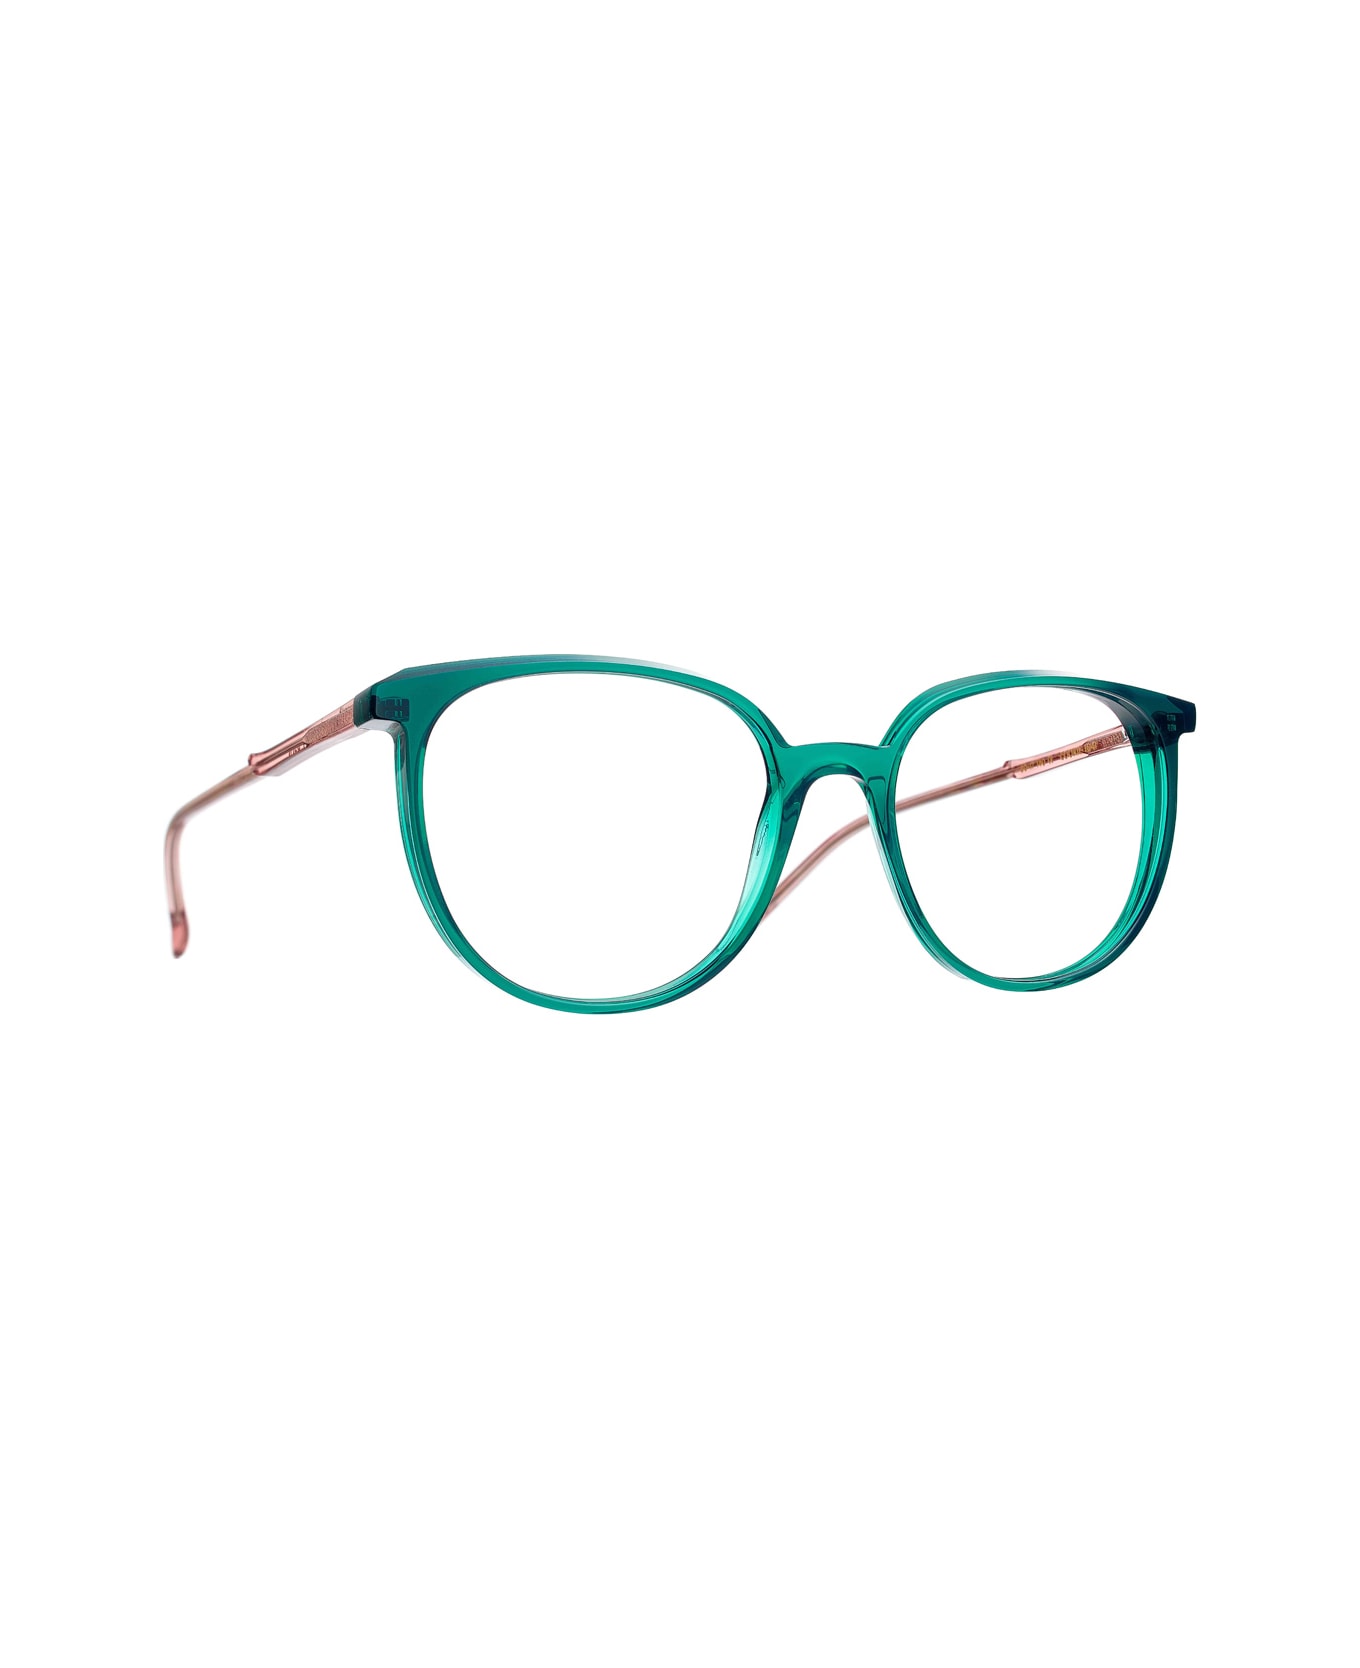 Blush 118s4ag0a - - Caroline Abram Glasses - Verde